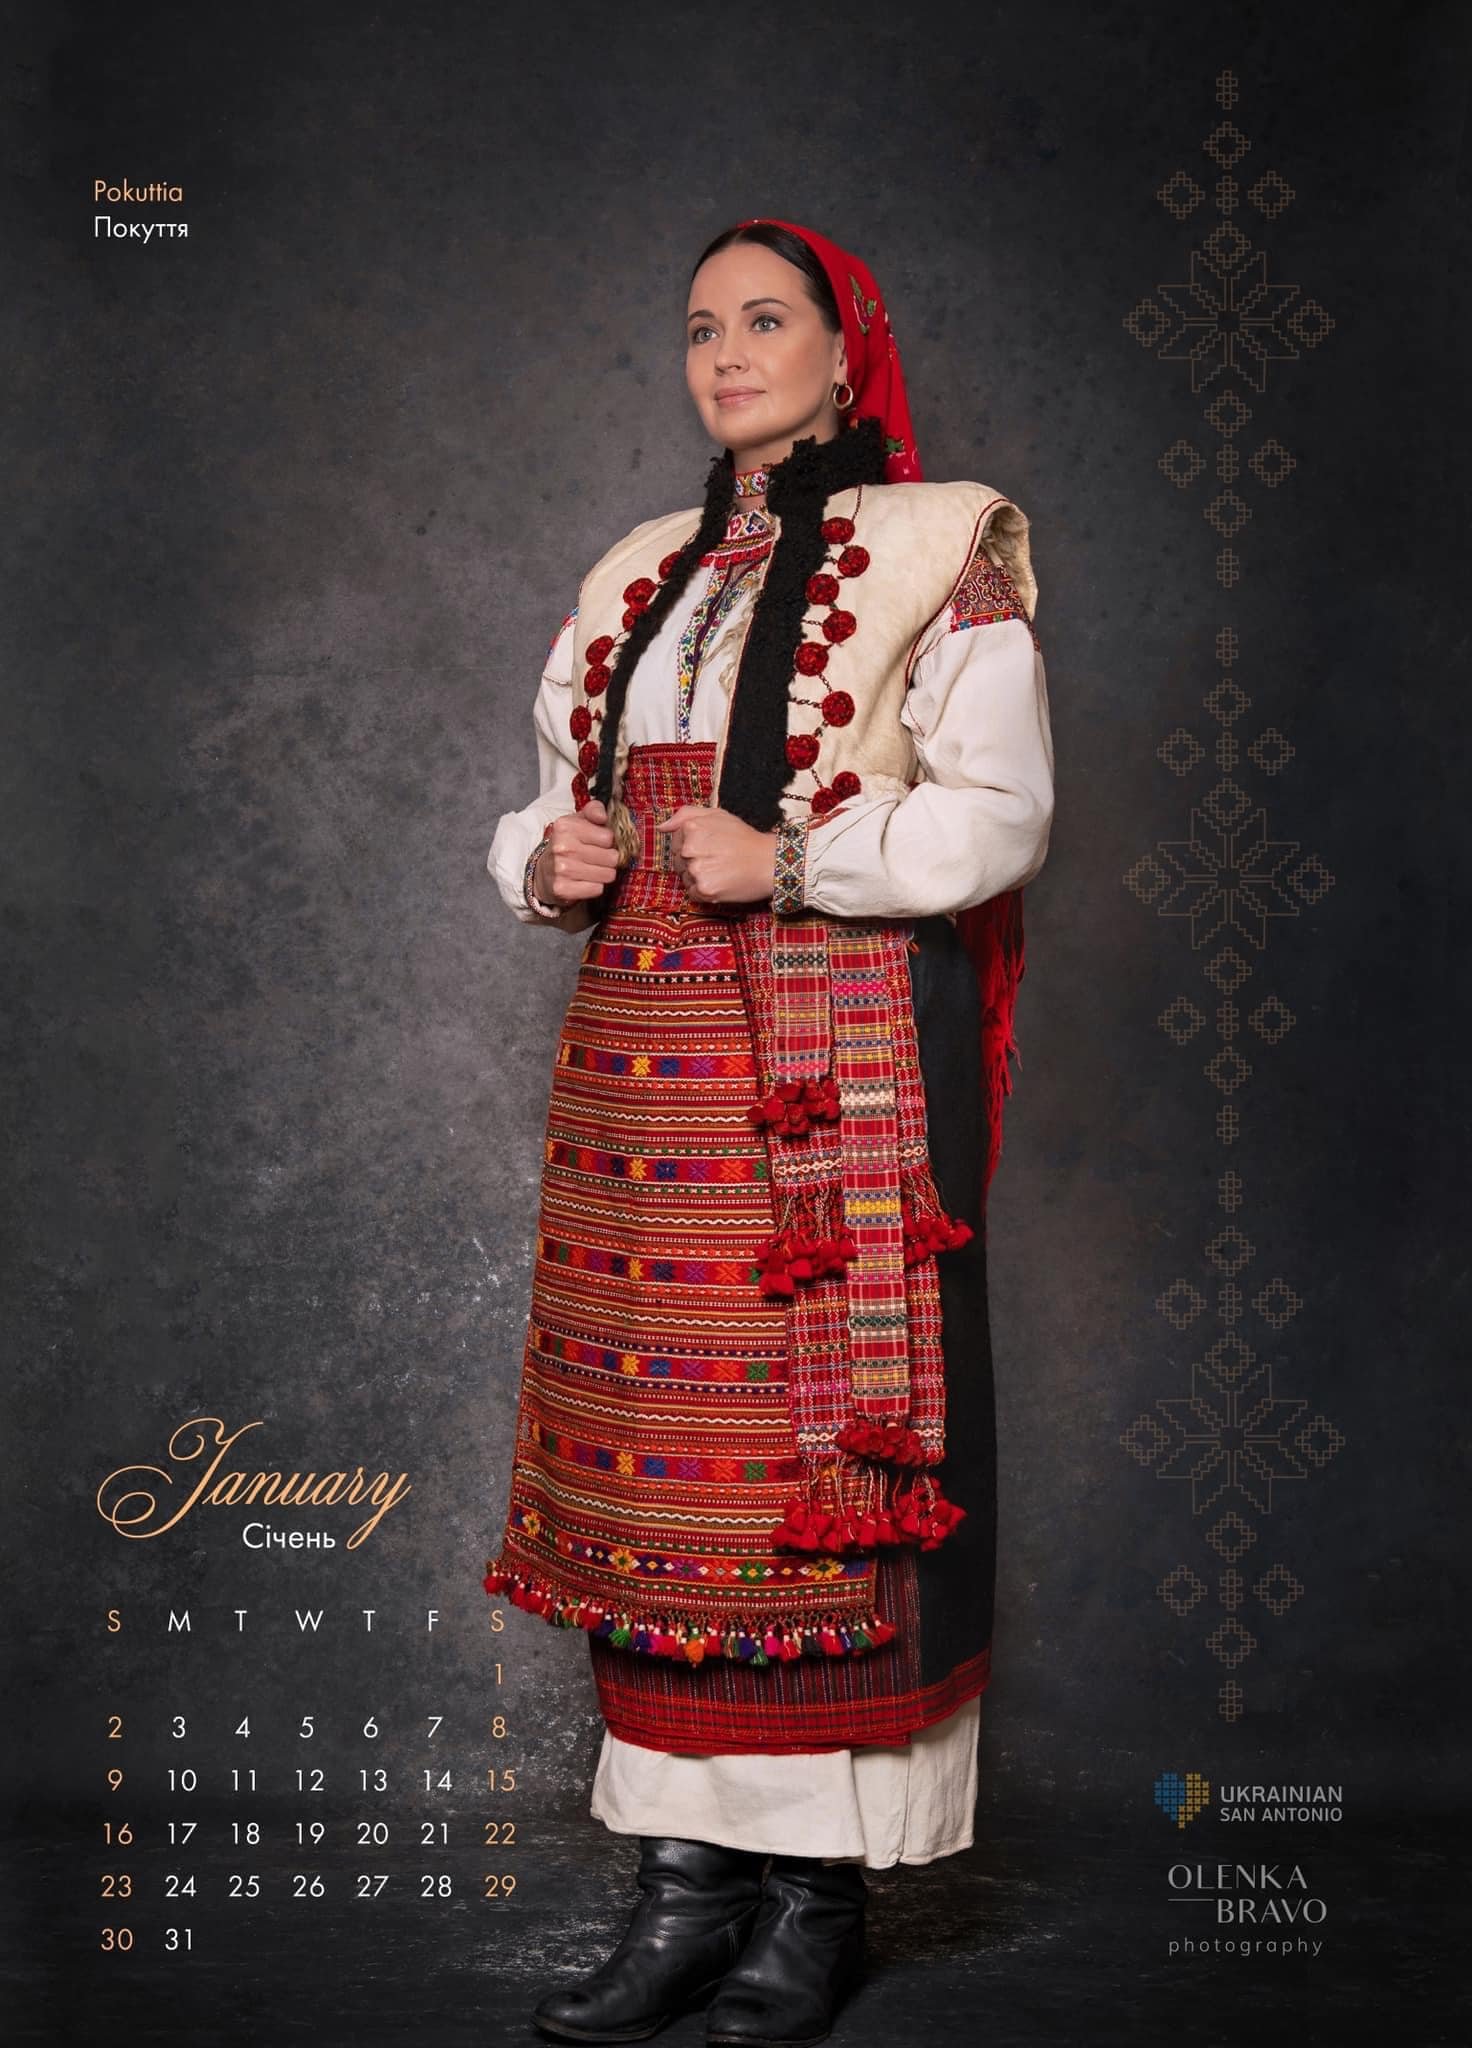 Ukrainian San Antonio_2022 Heritage Calendar_Етно Кален